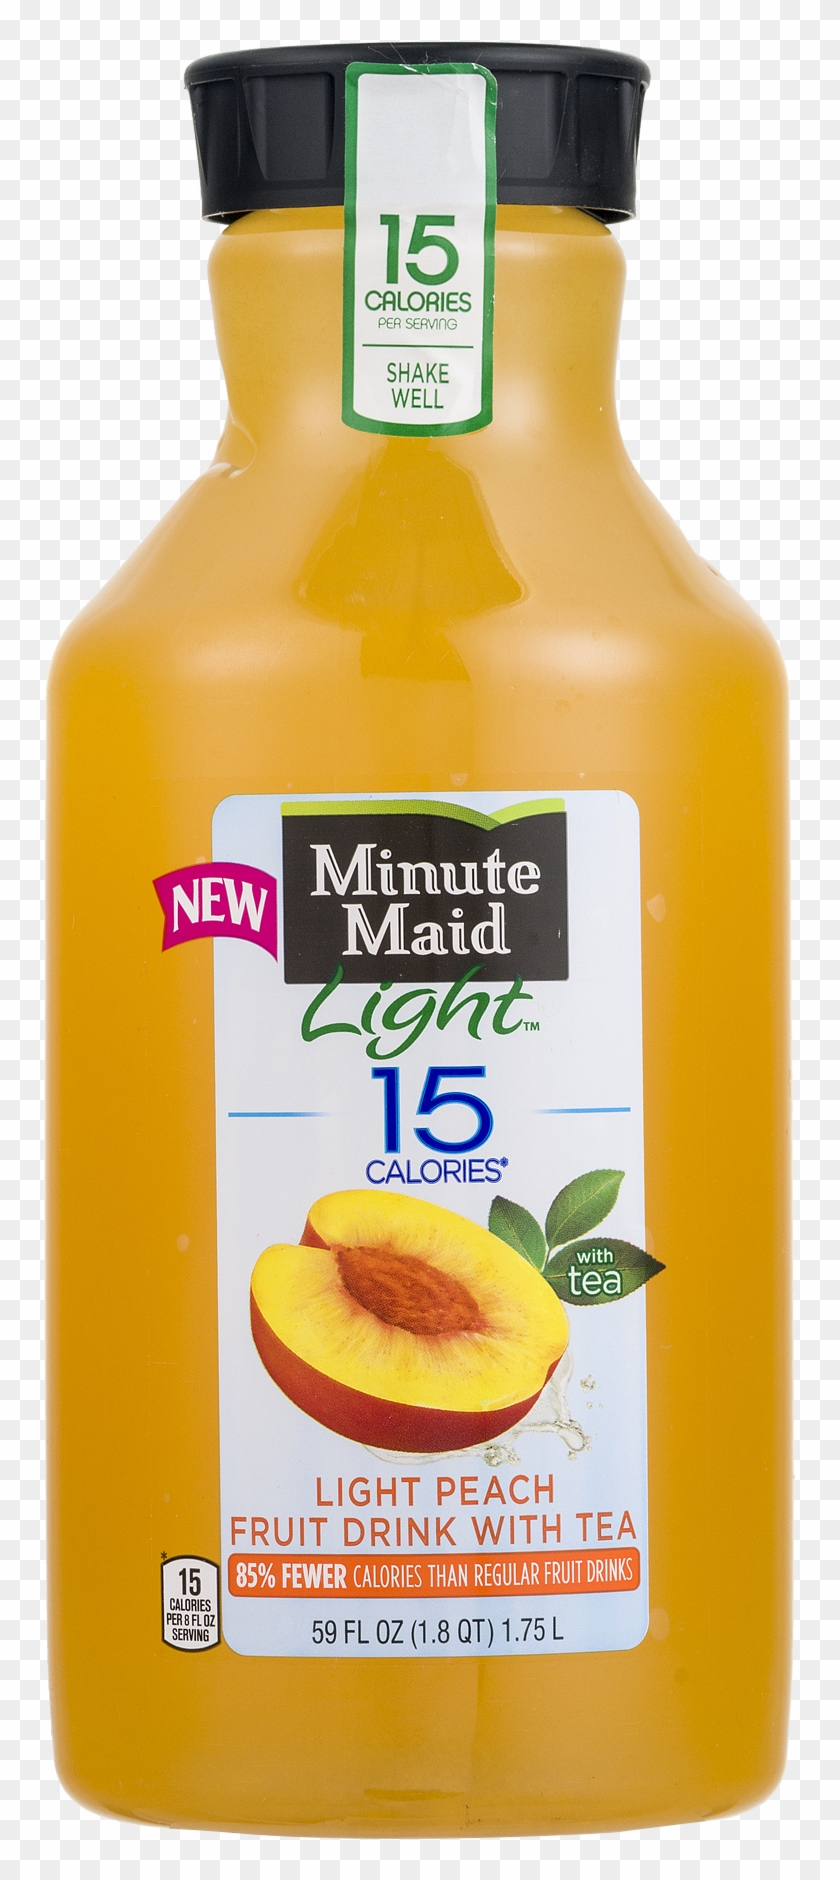 Minute Maid Light 15 Calories Light Peach Fruit Drink Clipart #4148183